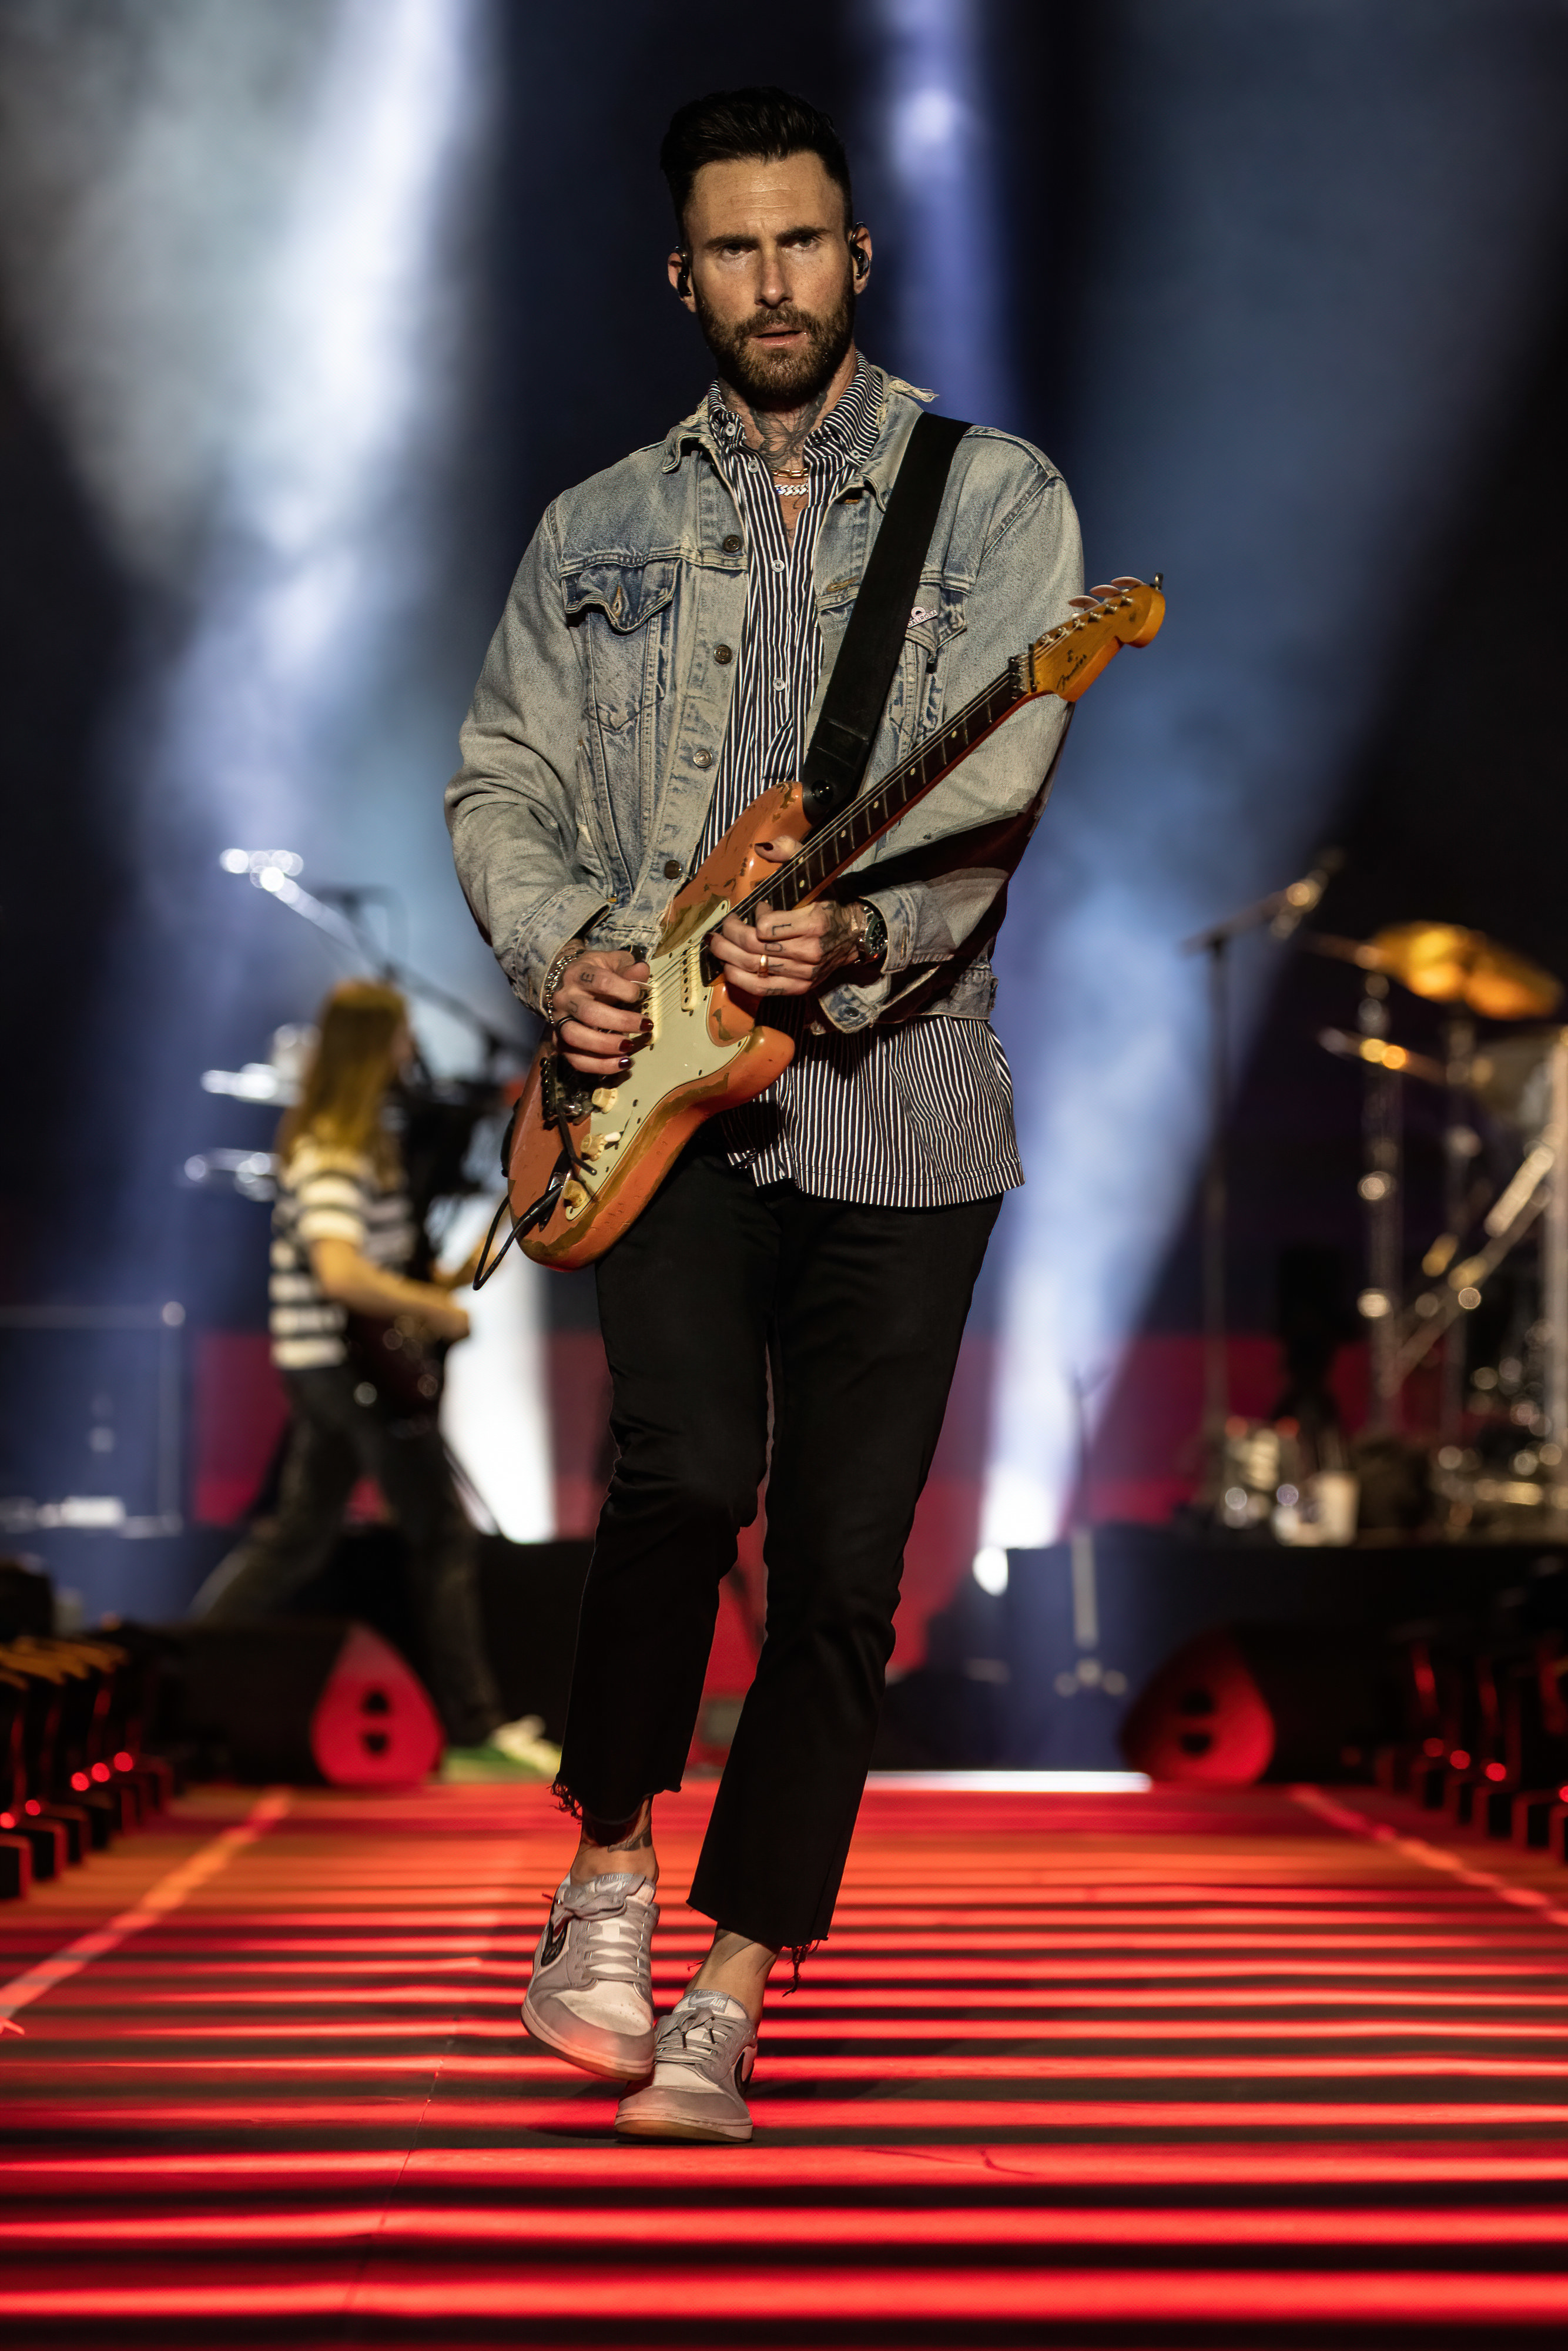 Adam Levine of Maroon 5 performing live